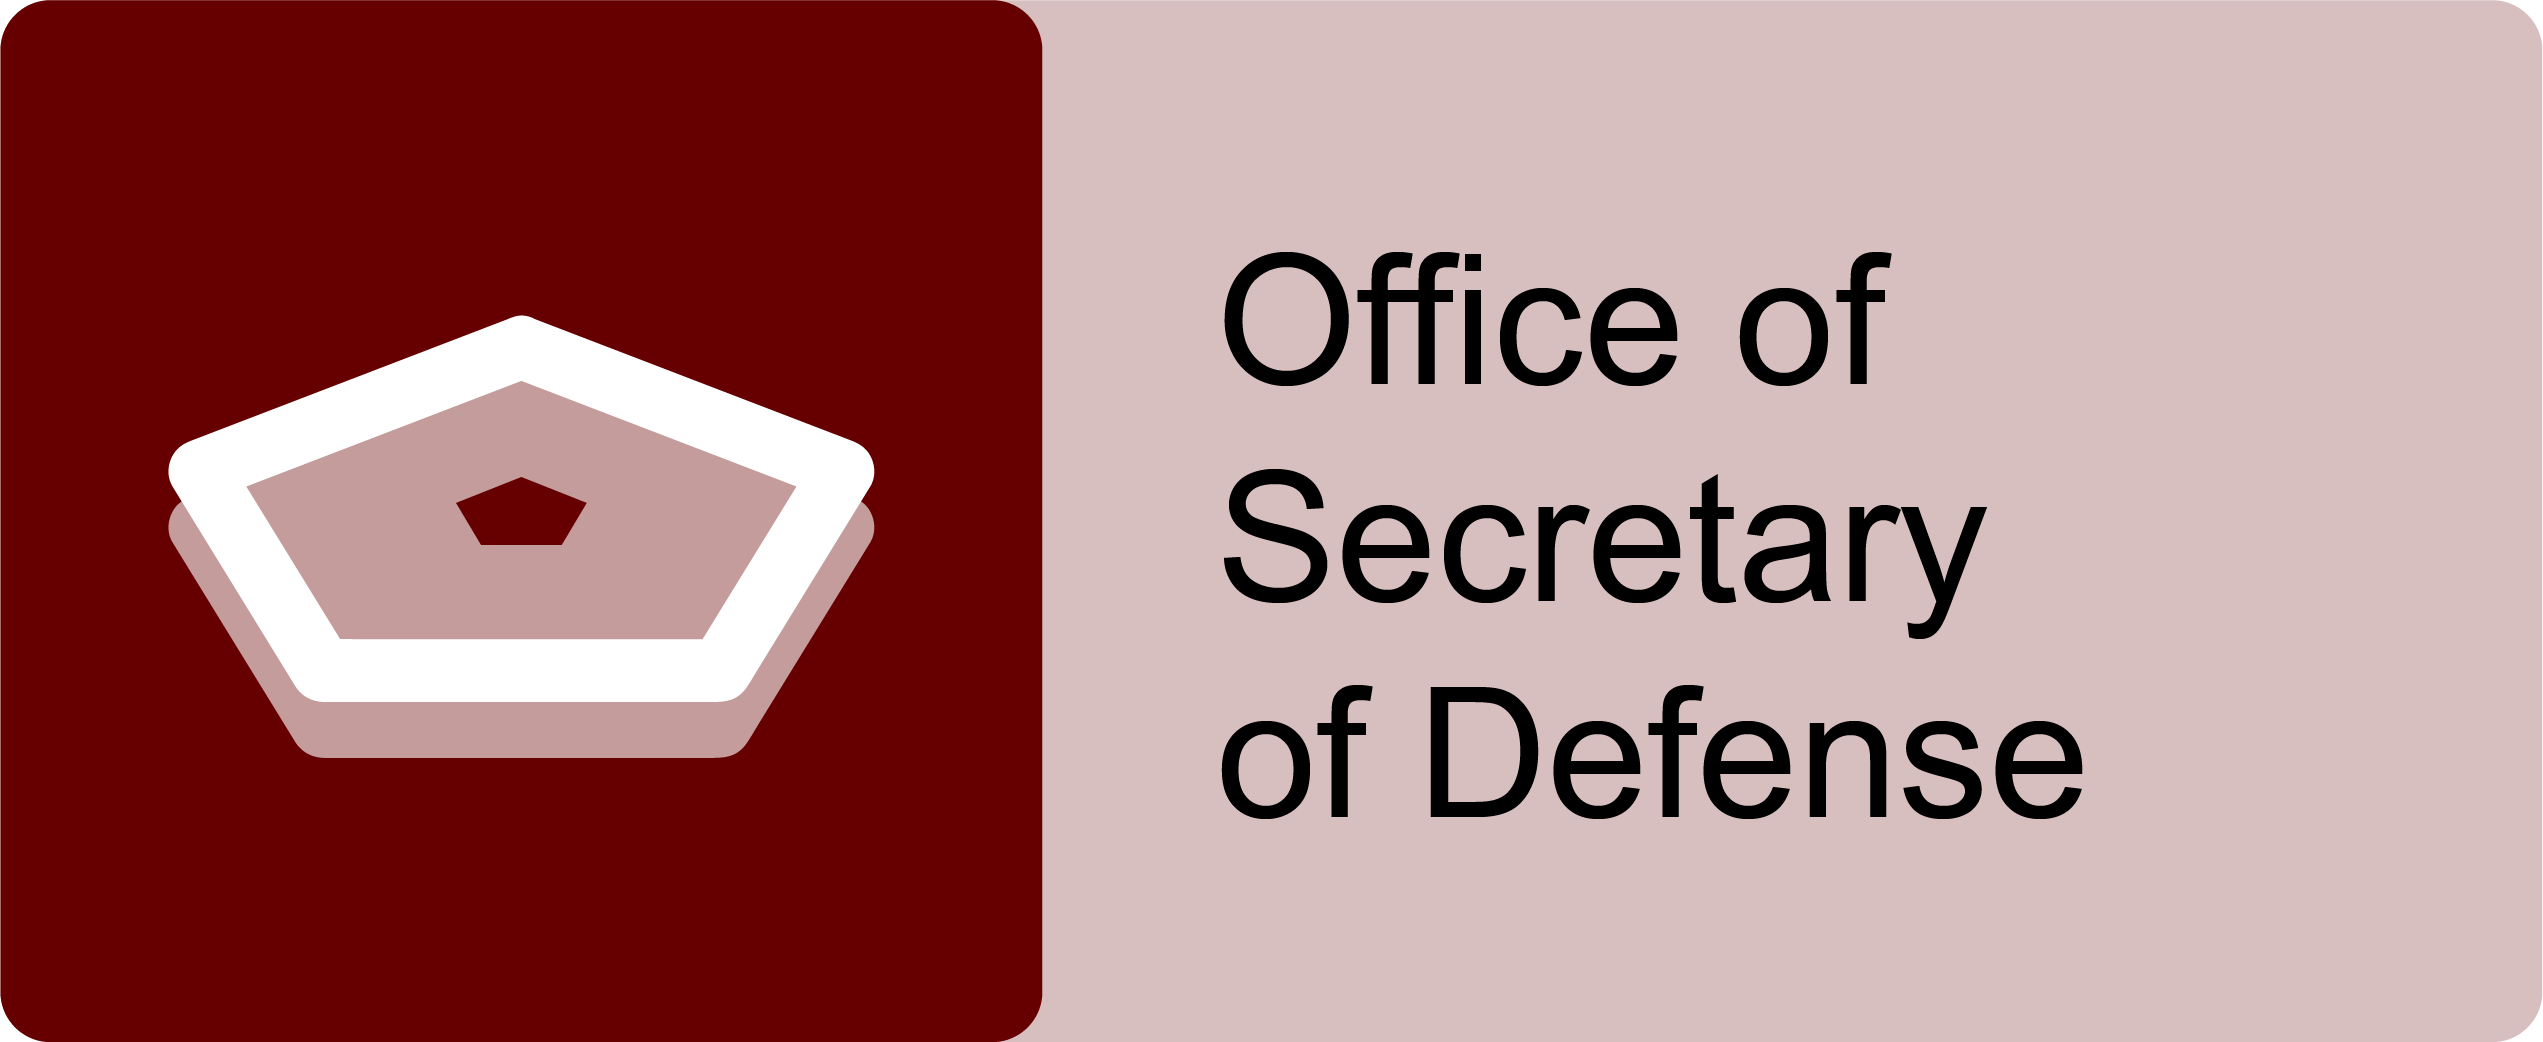 Office of Secretary of Defense